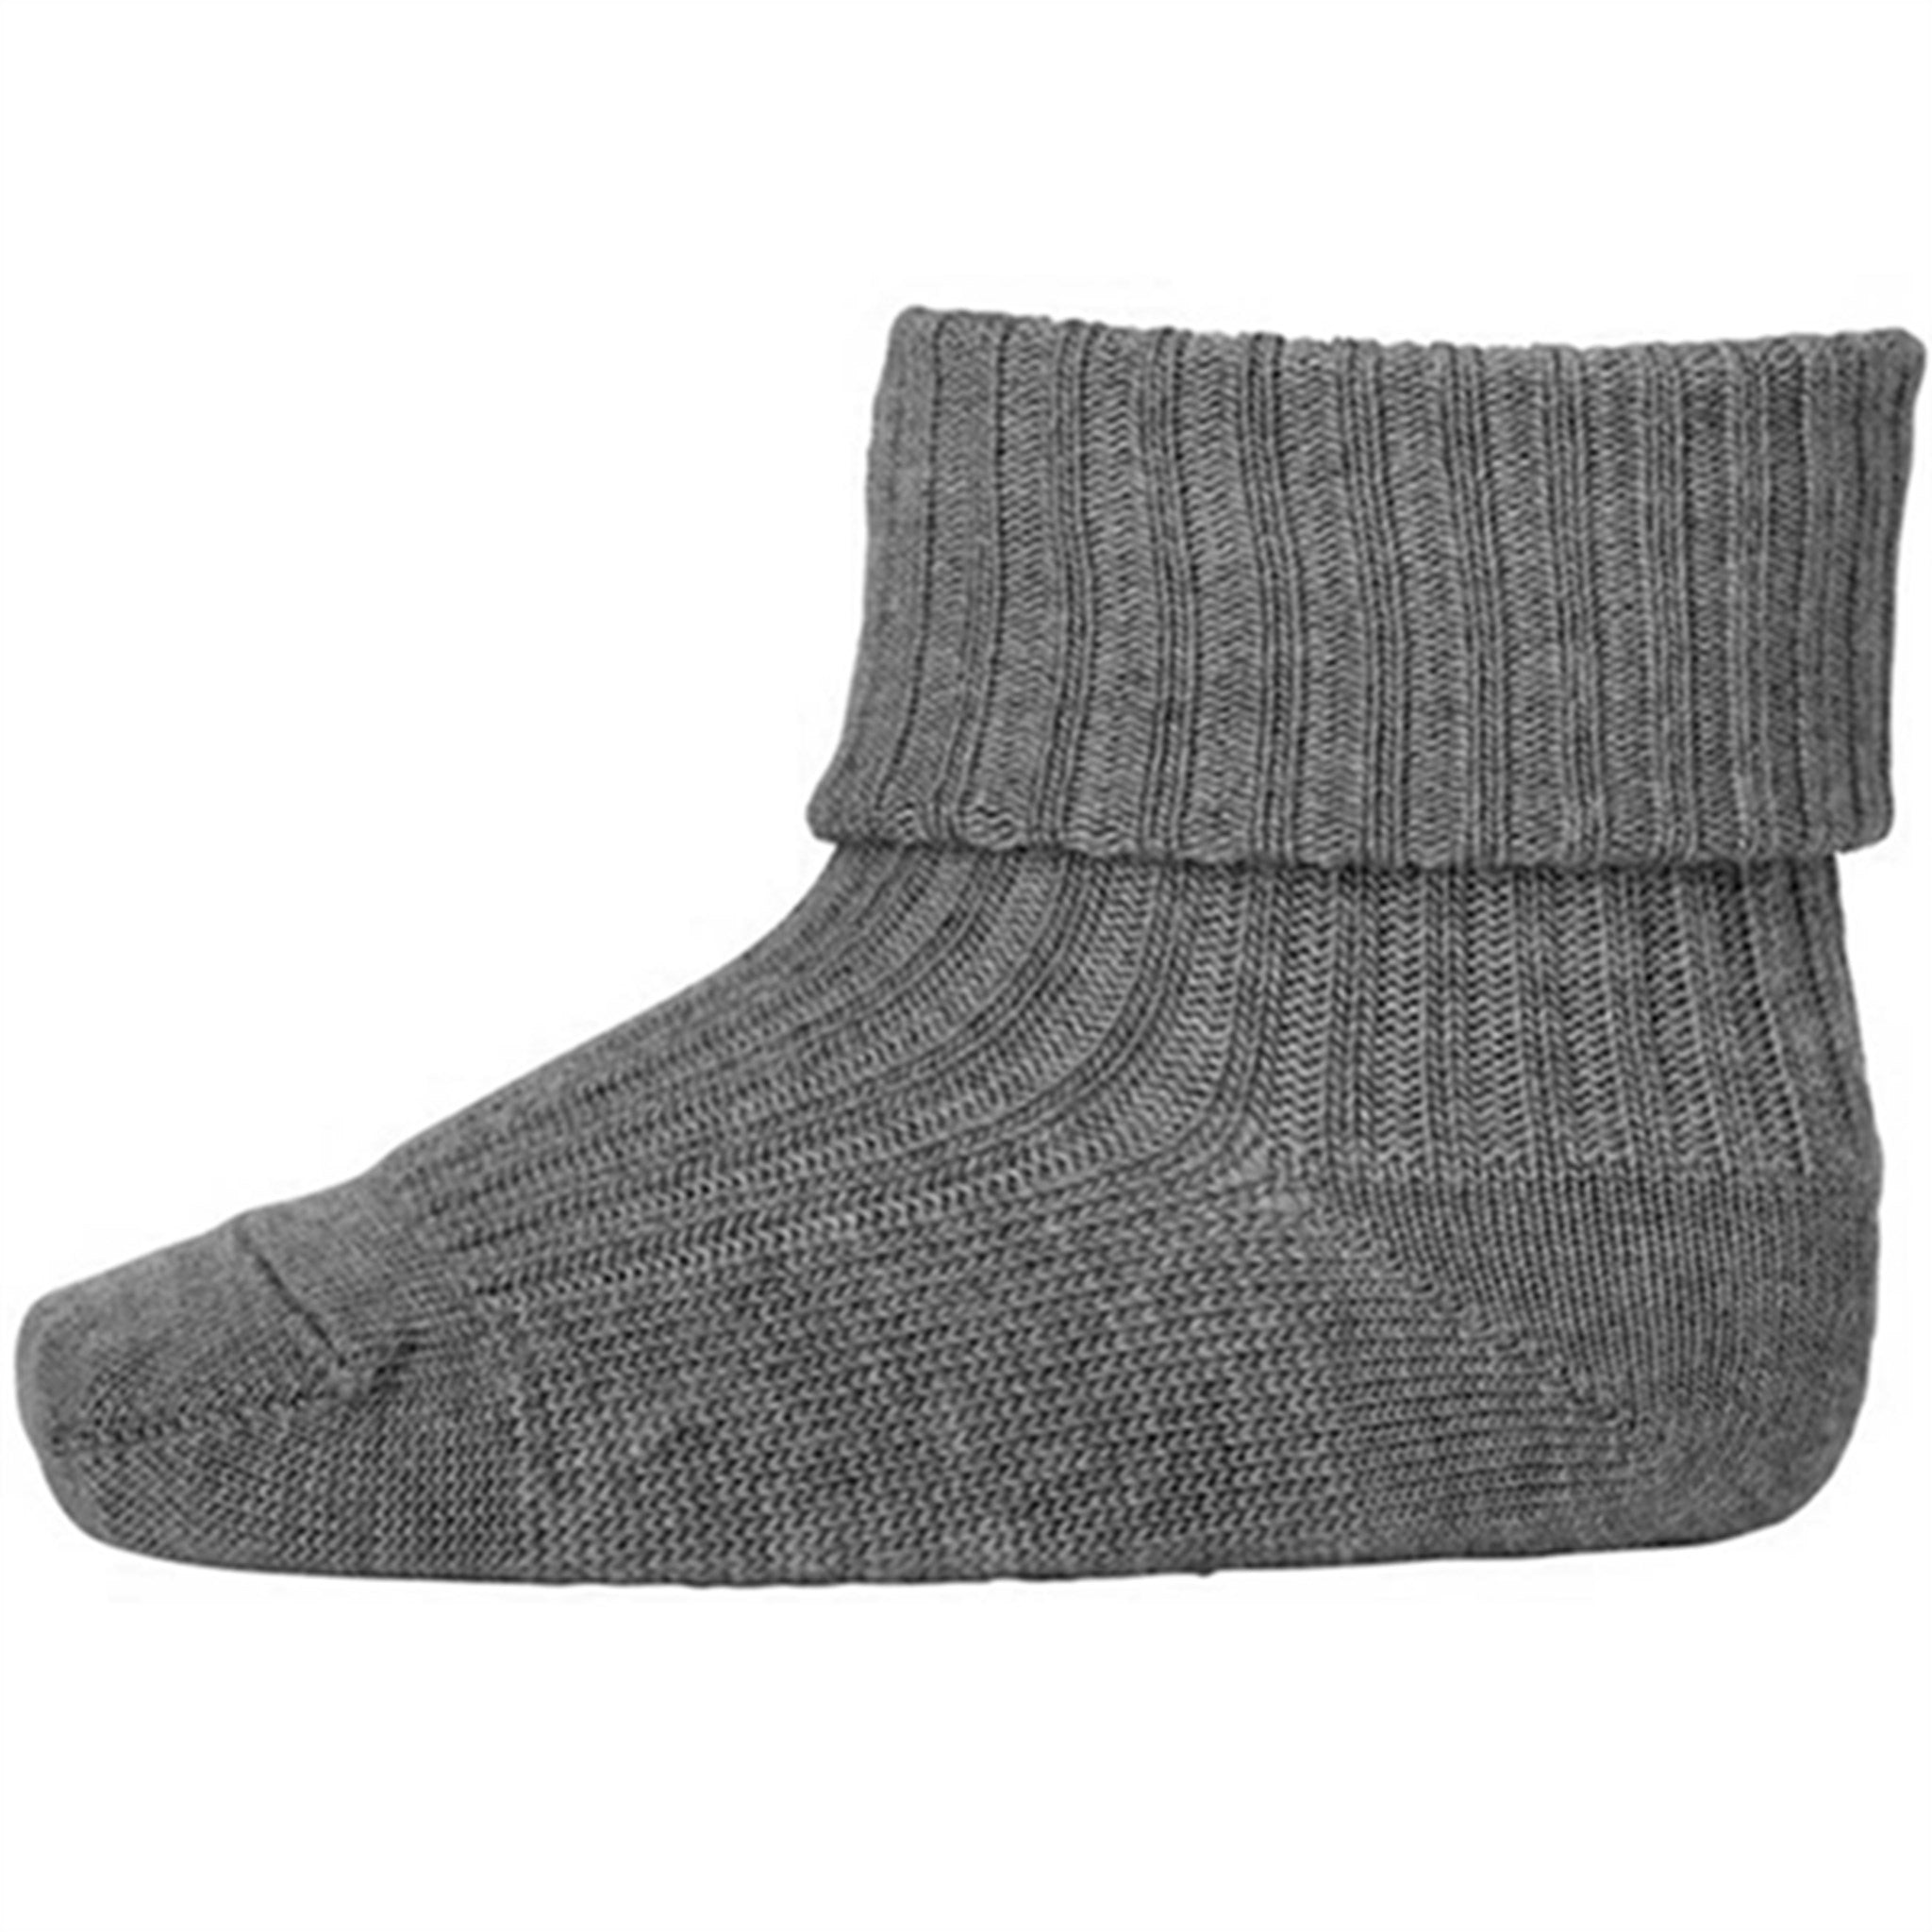 MP Wool Socks Rib Grey Melange